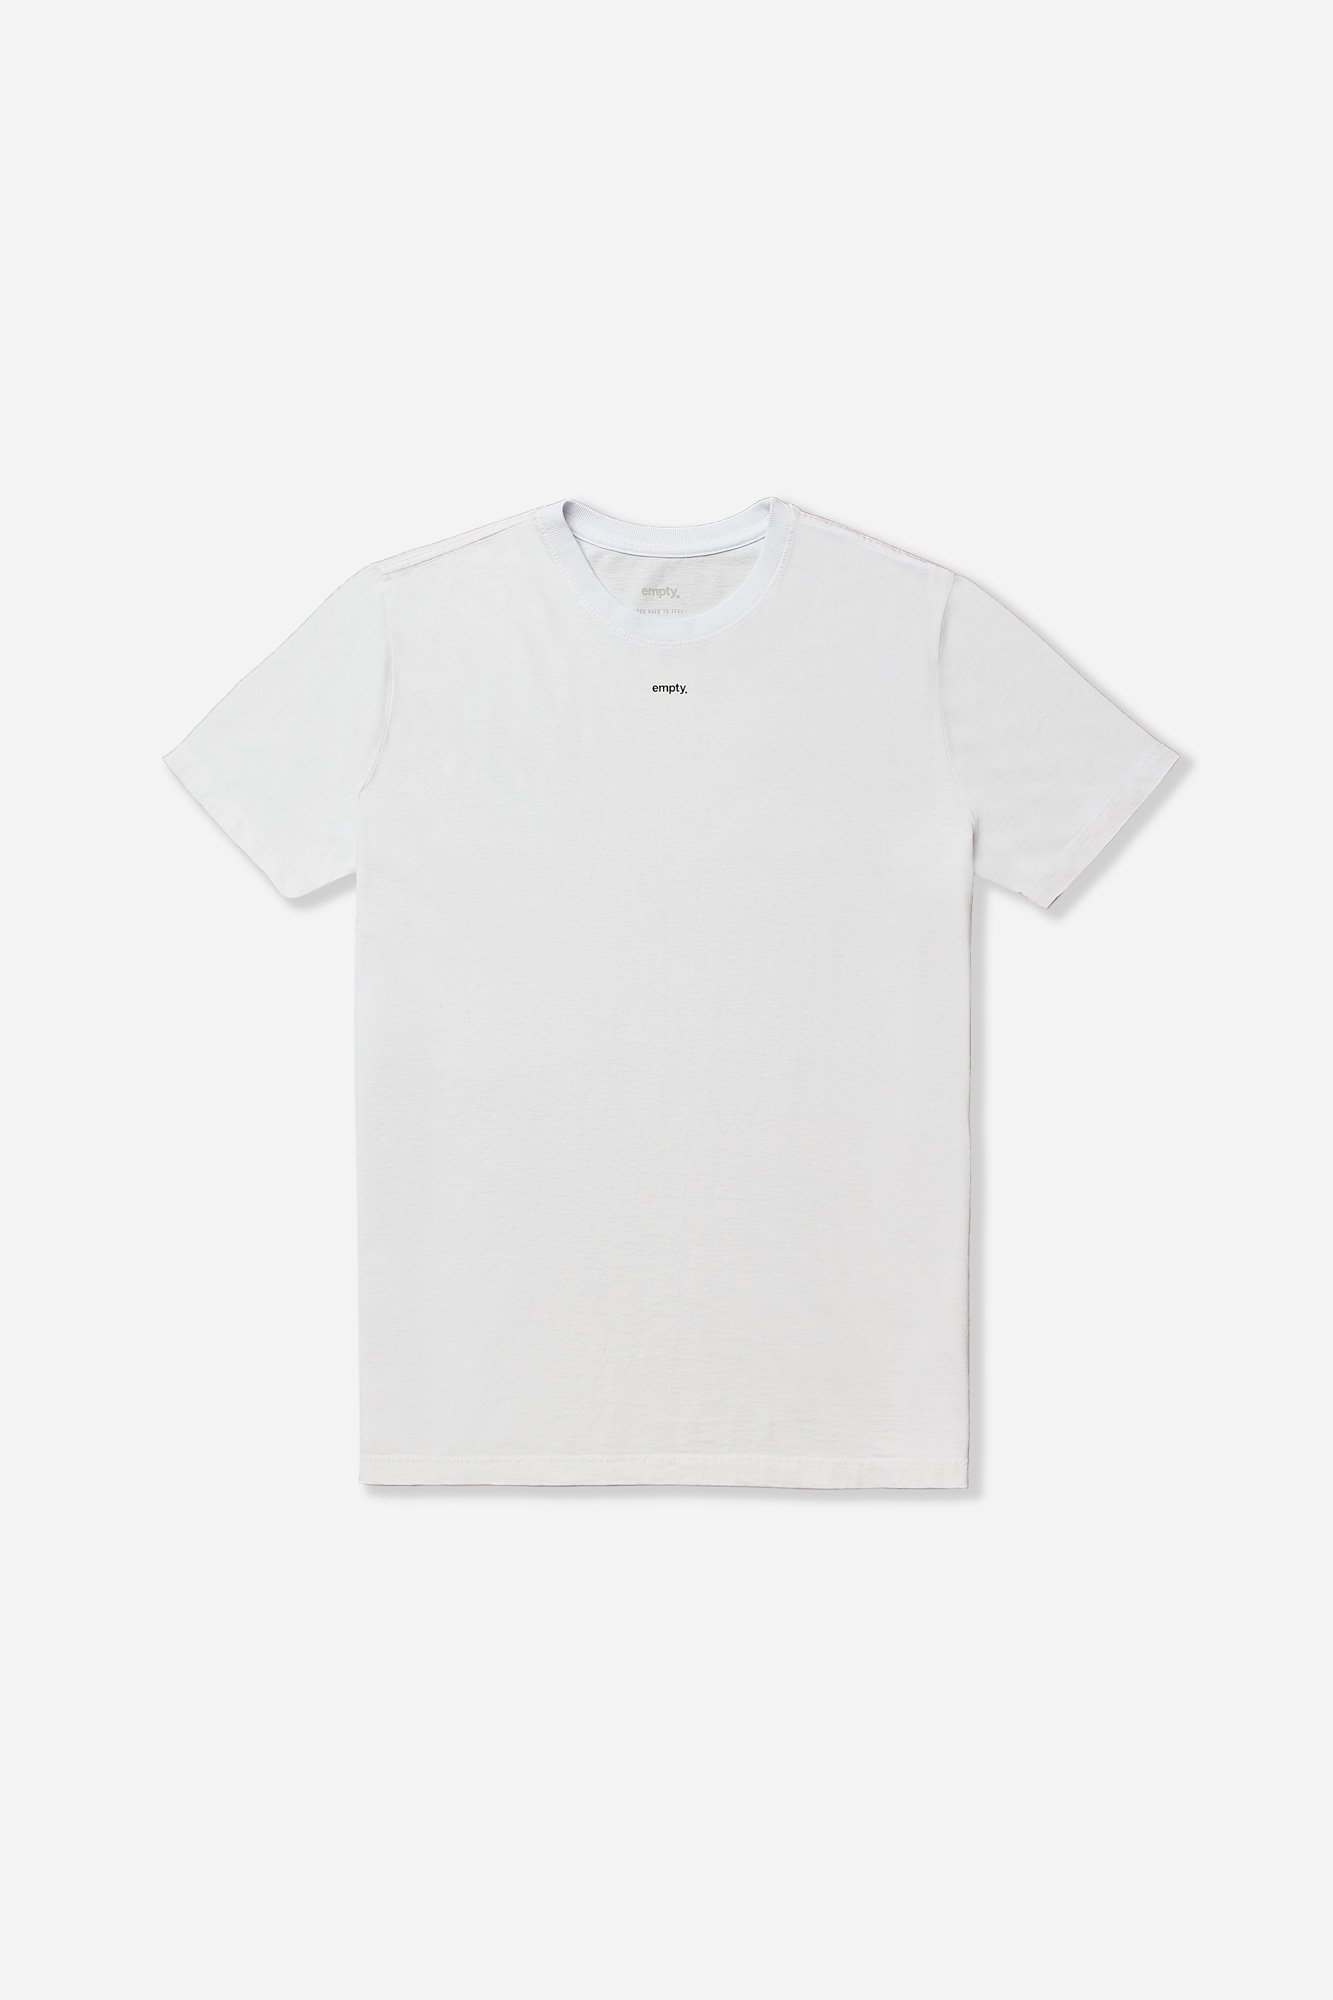 02 camiseta company branco